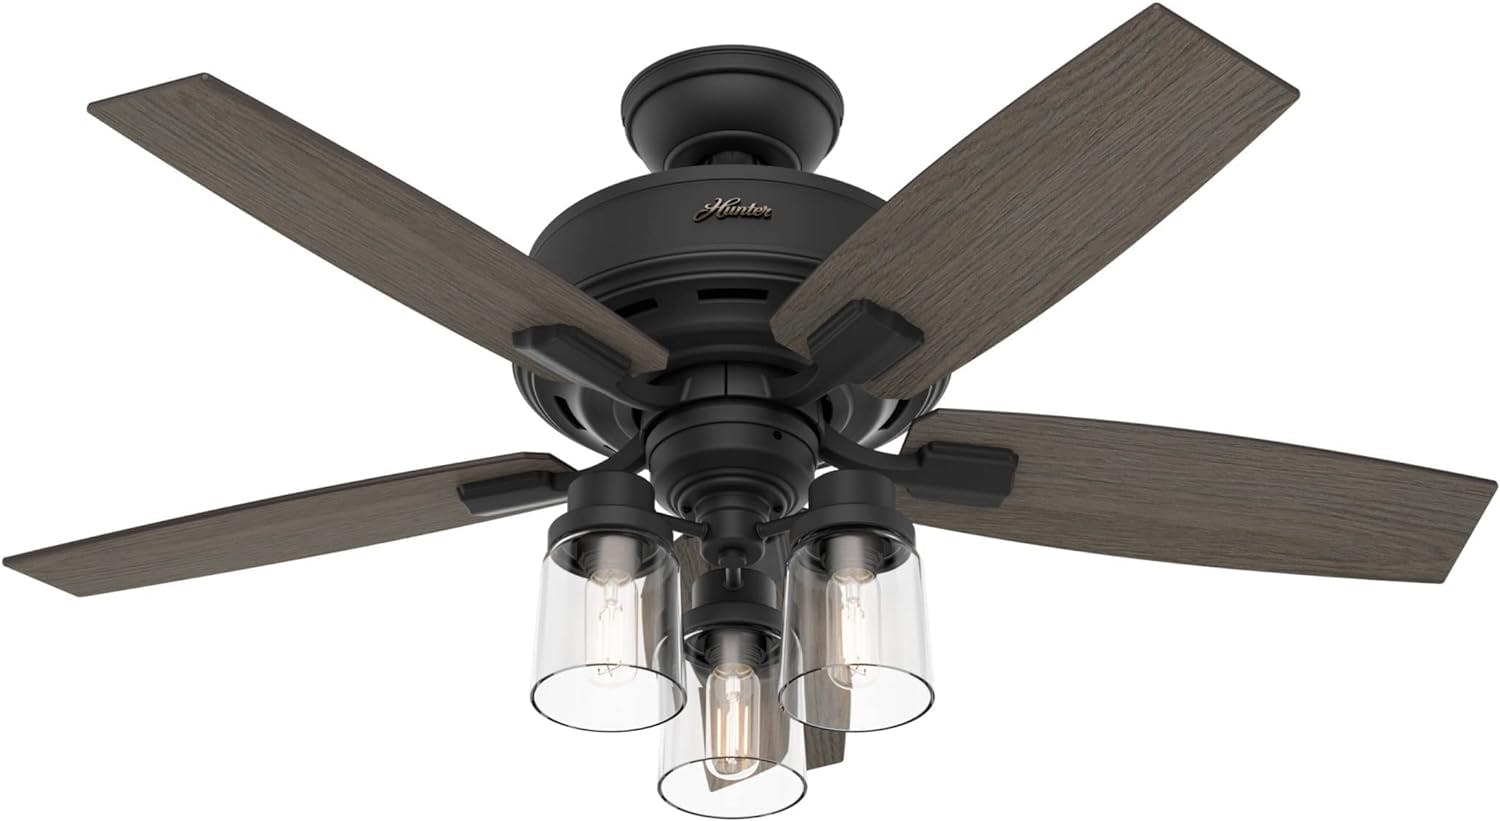 Bennett 44" Matte Black Low Profile Ceiling Fan with LED Light & Remote